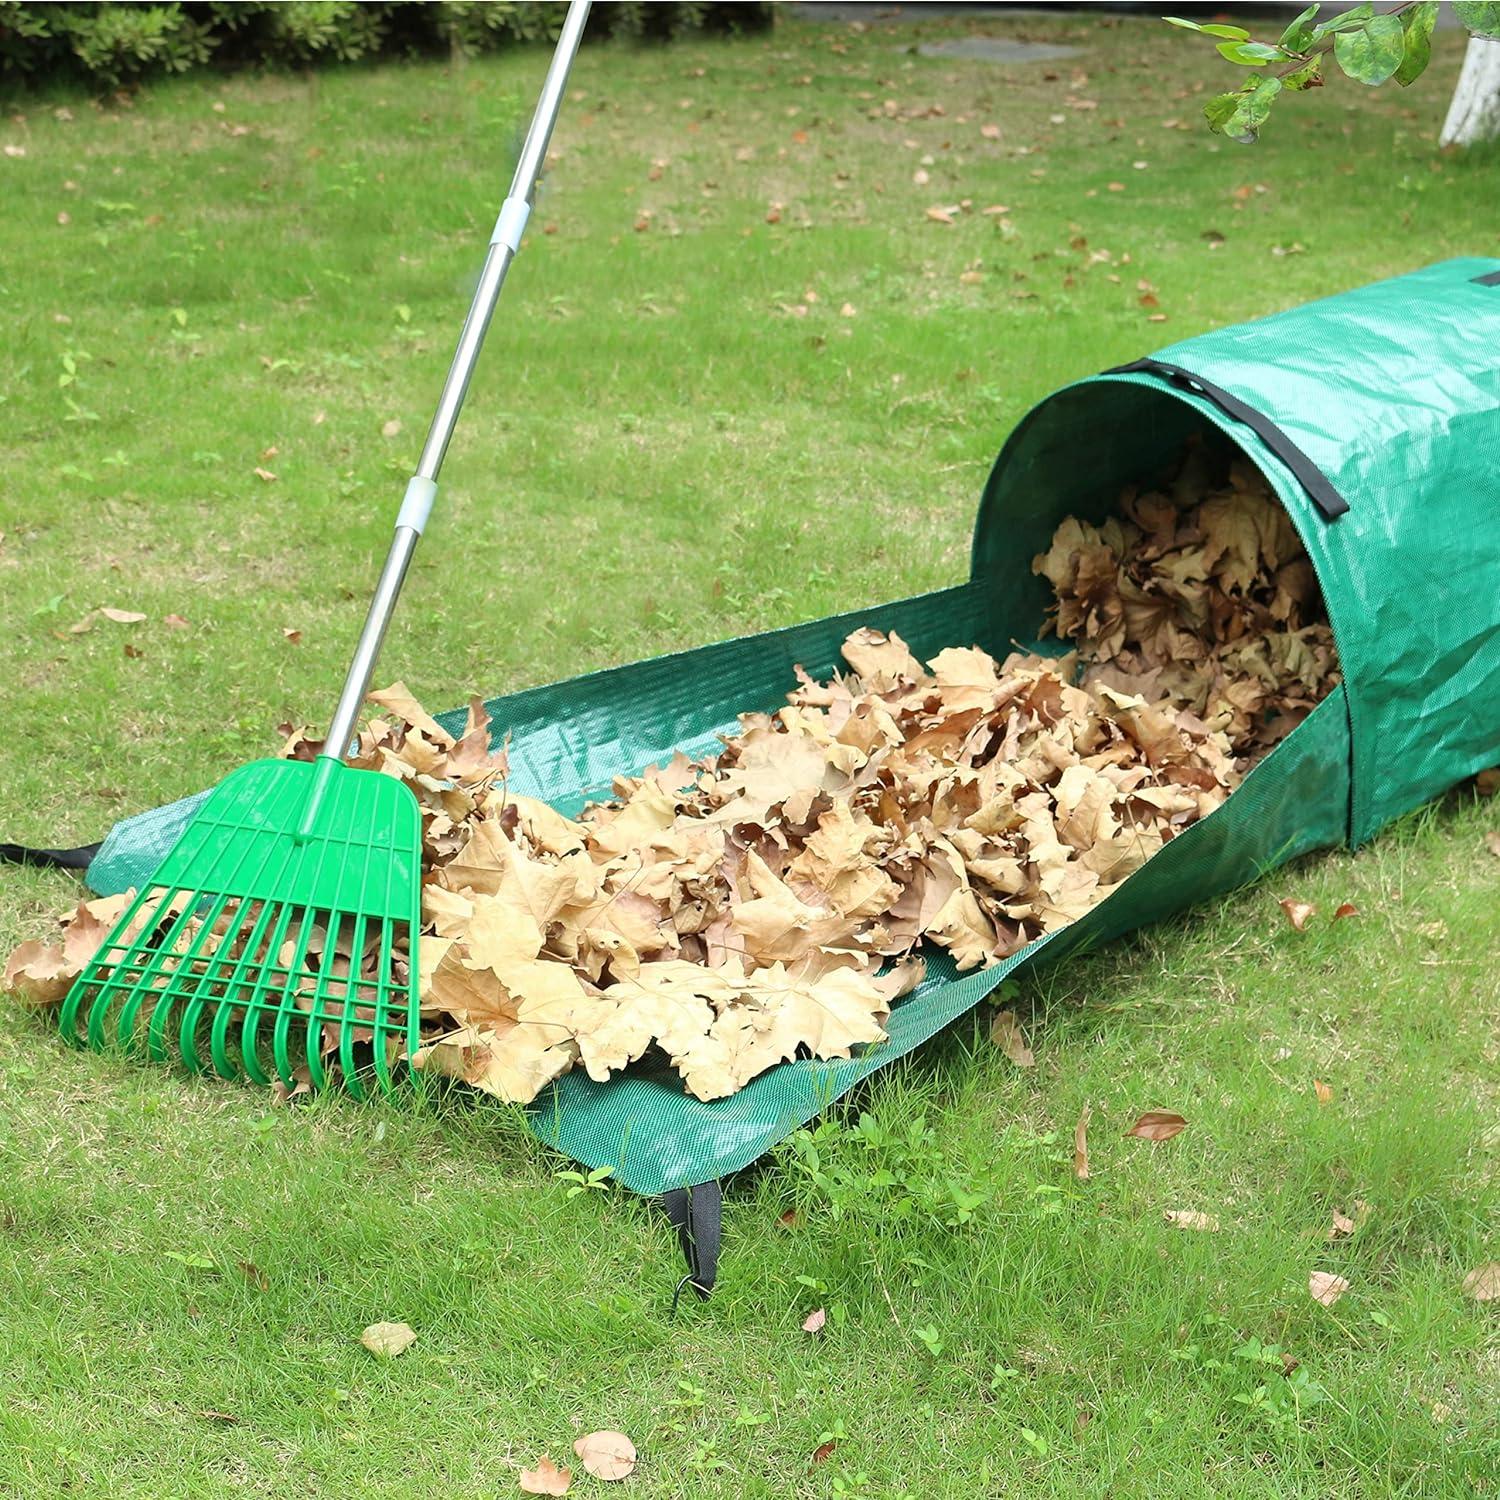 3Pack Reusable Garden Waste Bags 72 Gallon Yard Leaf Lawn Trash